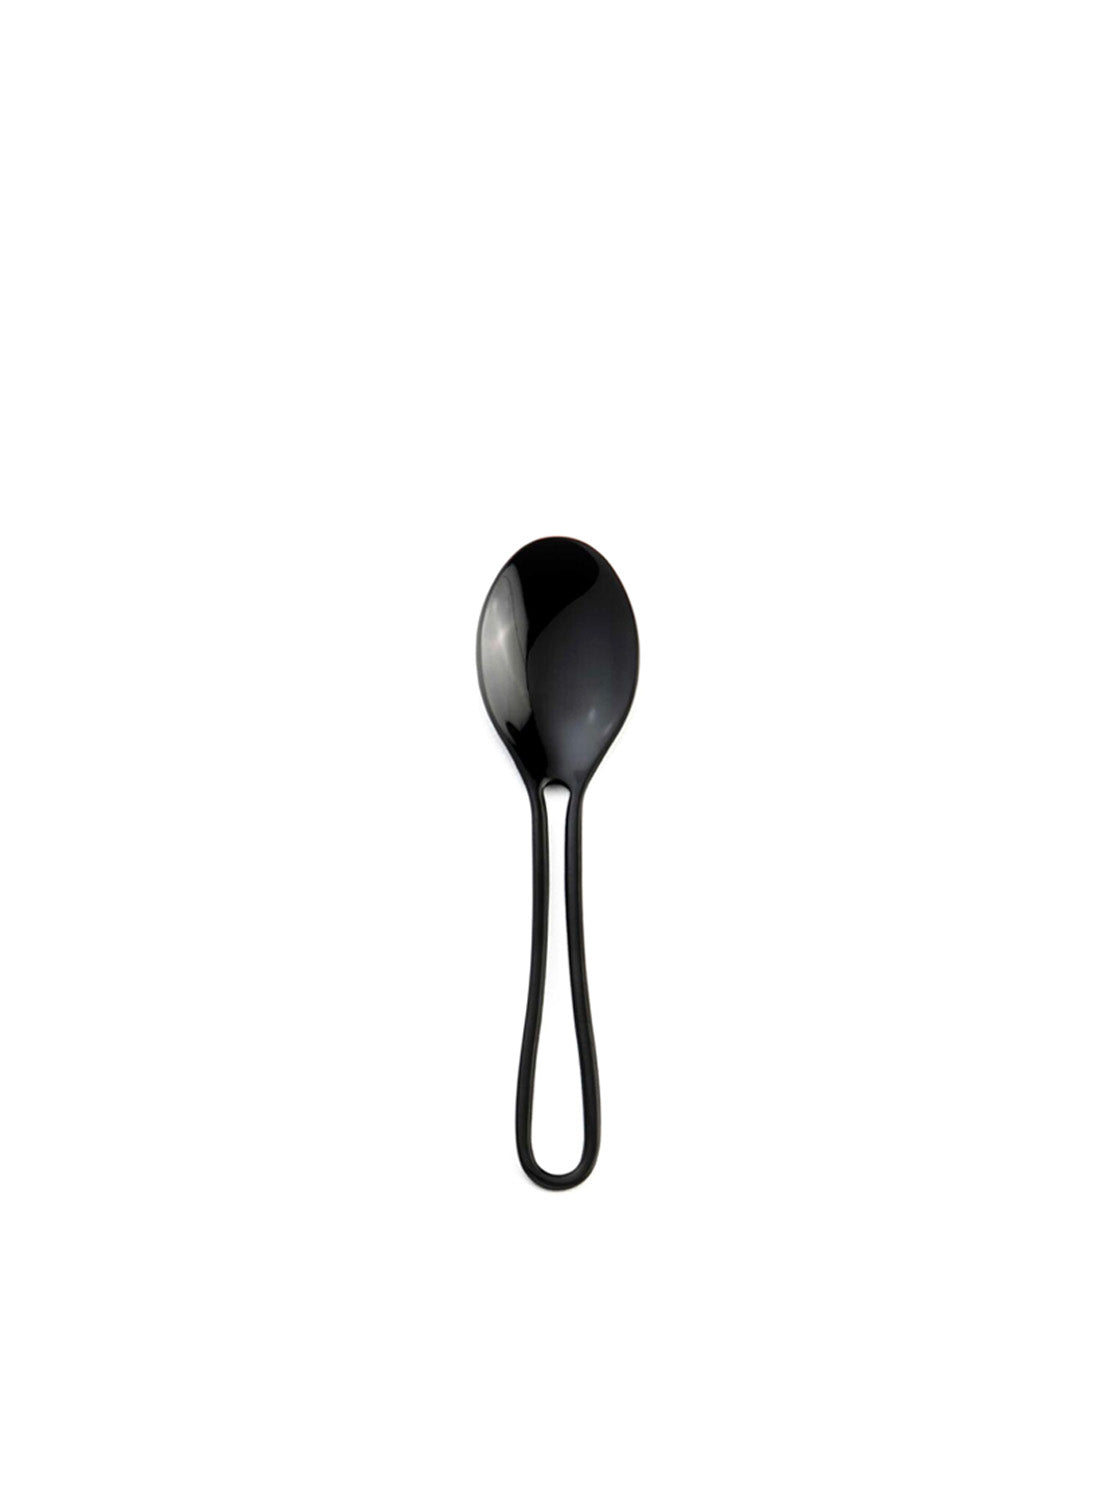 Maarten Baptist Outline Small Spoon, black